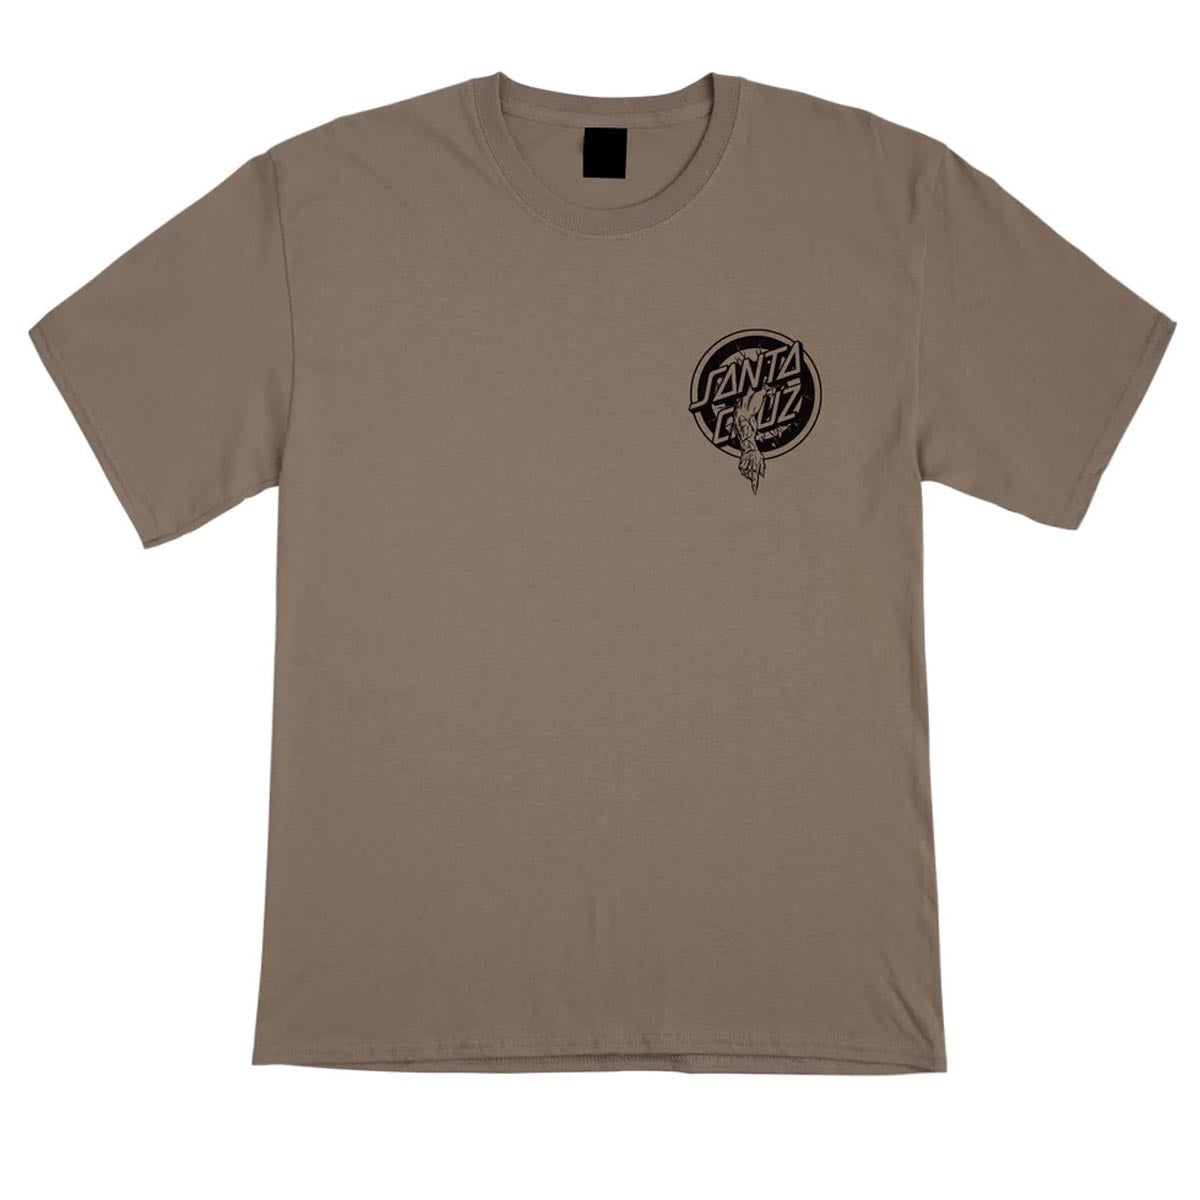 Santa Cruz Roskopp Evo 2 T-Shirt - Dusty Brown image 2